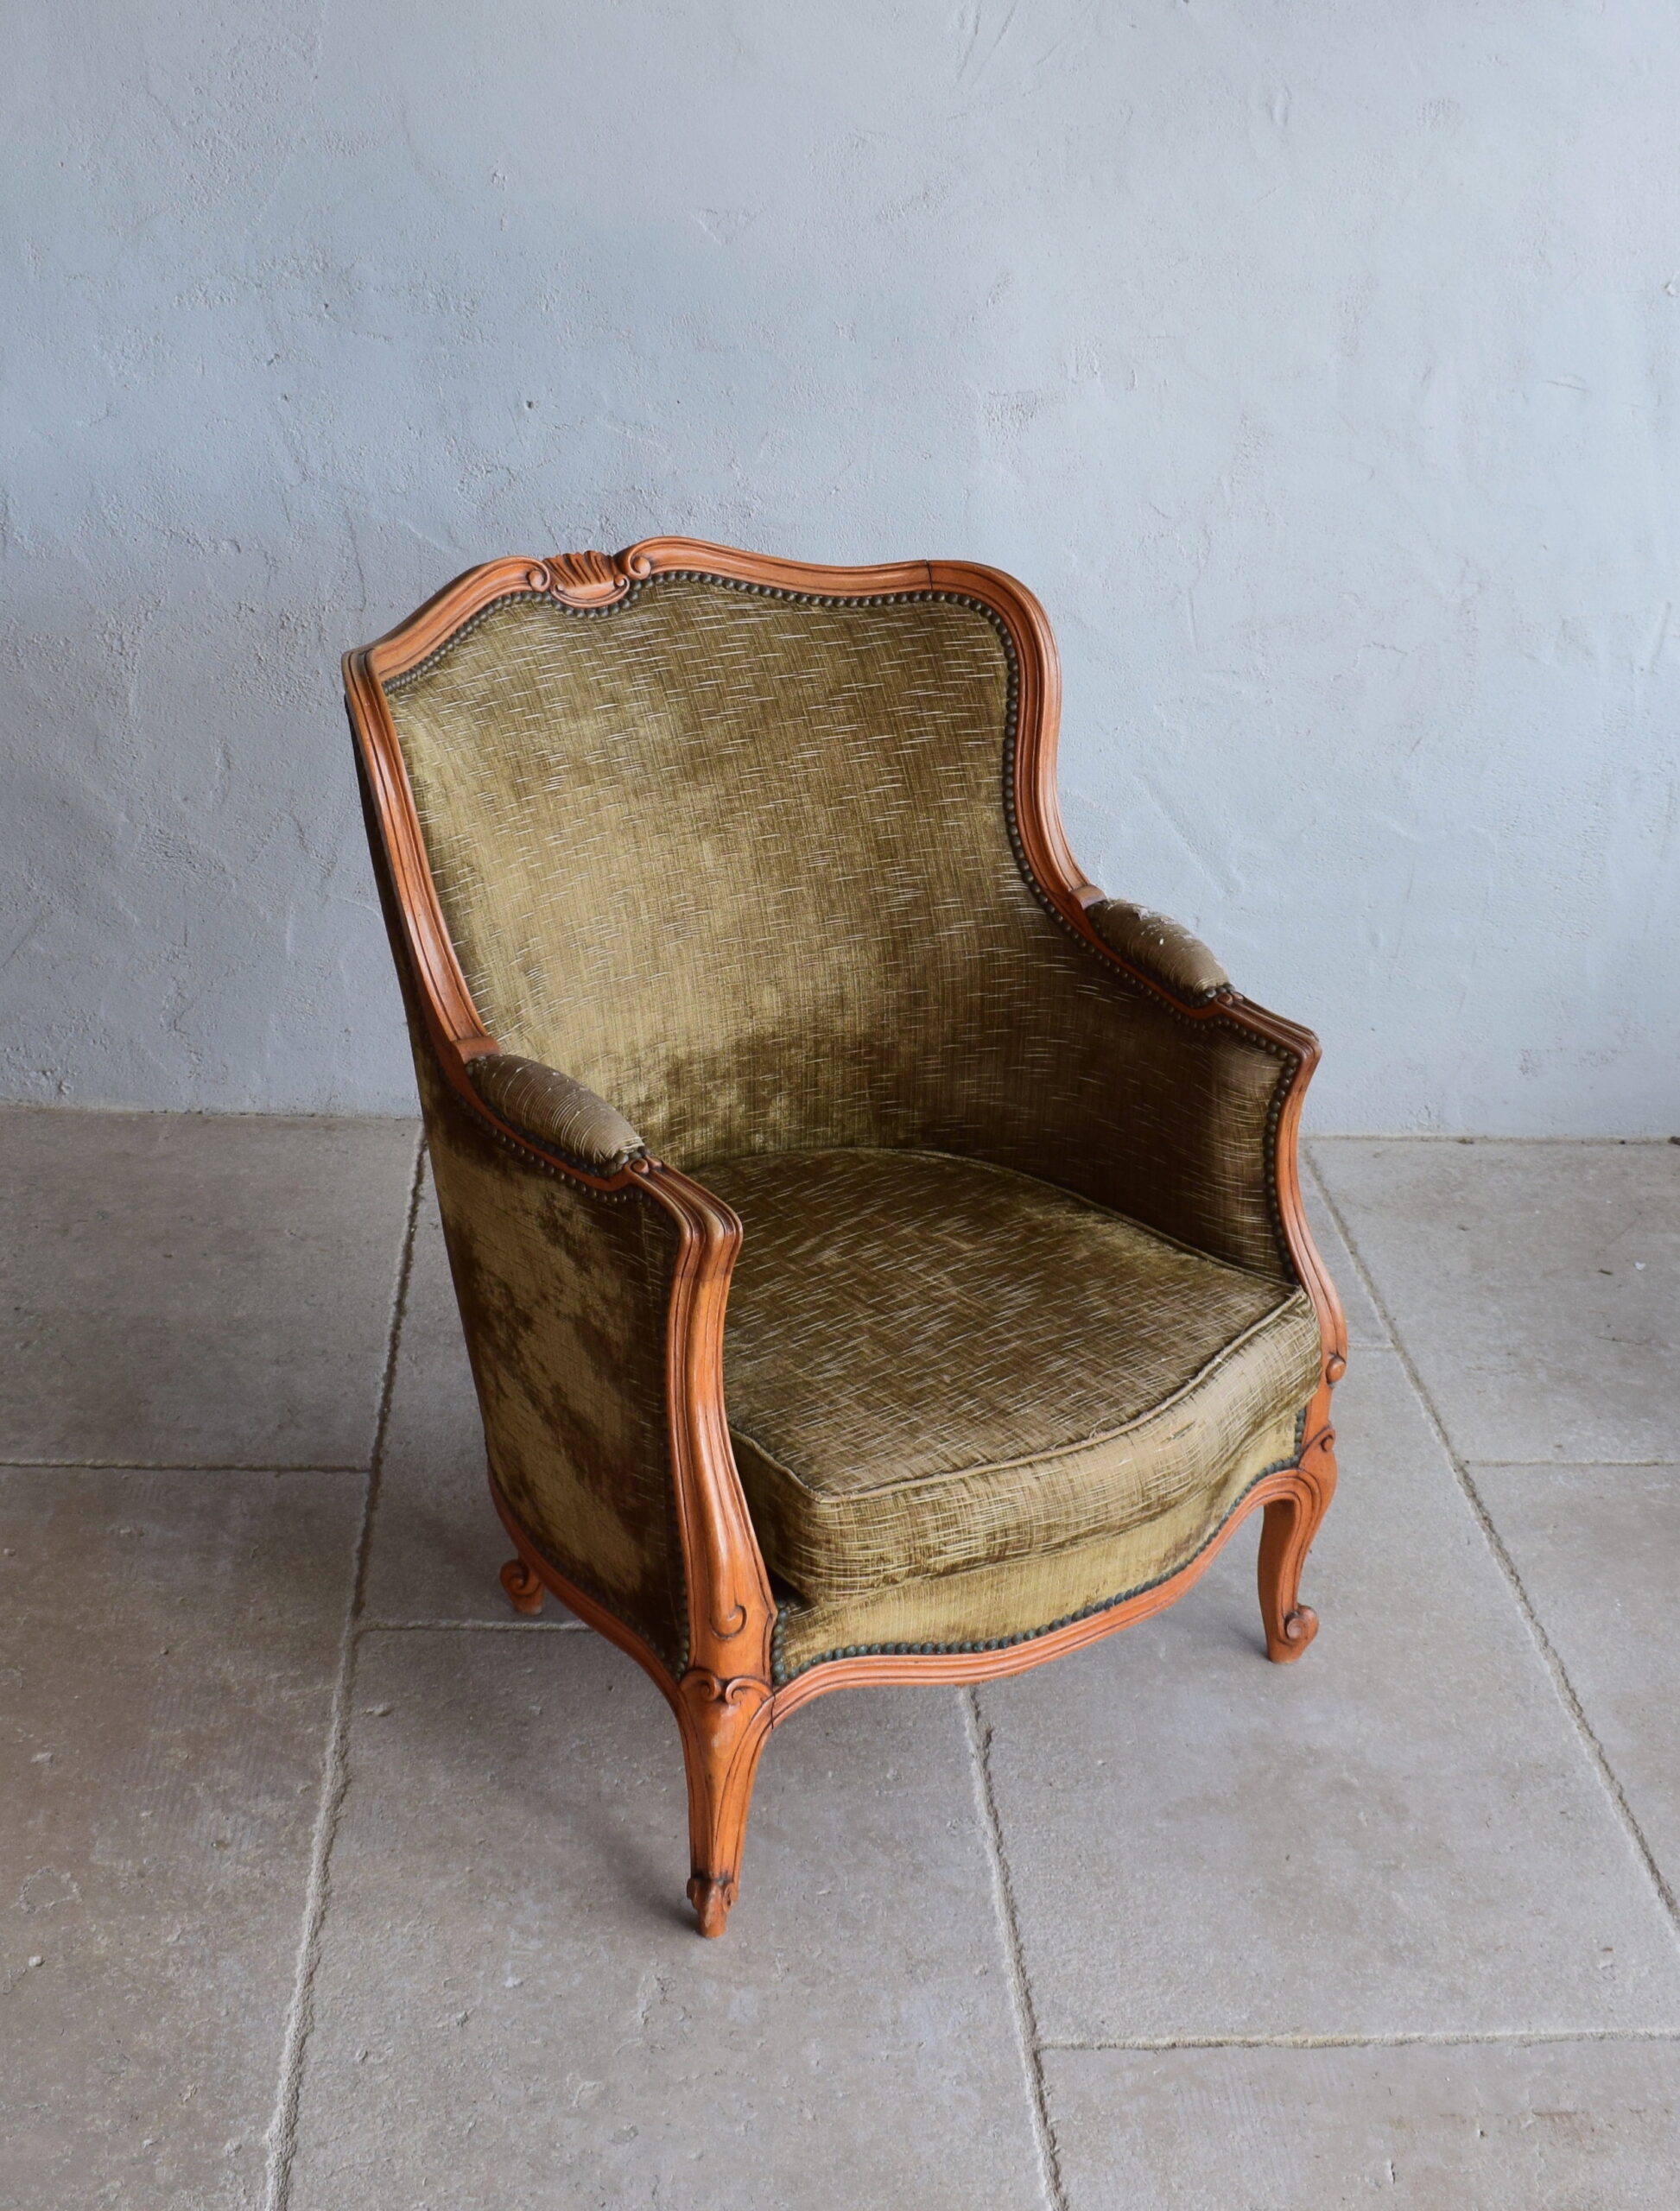 19th Century Rococo Revival Antique Bergere Armchair in Louis XV Taste